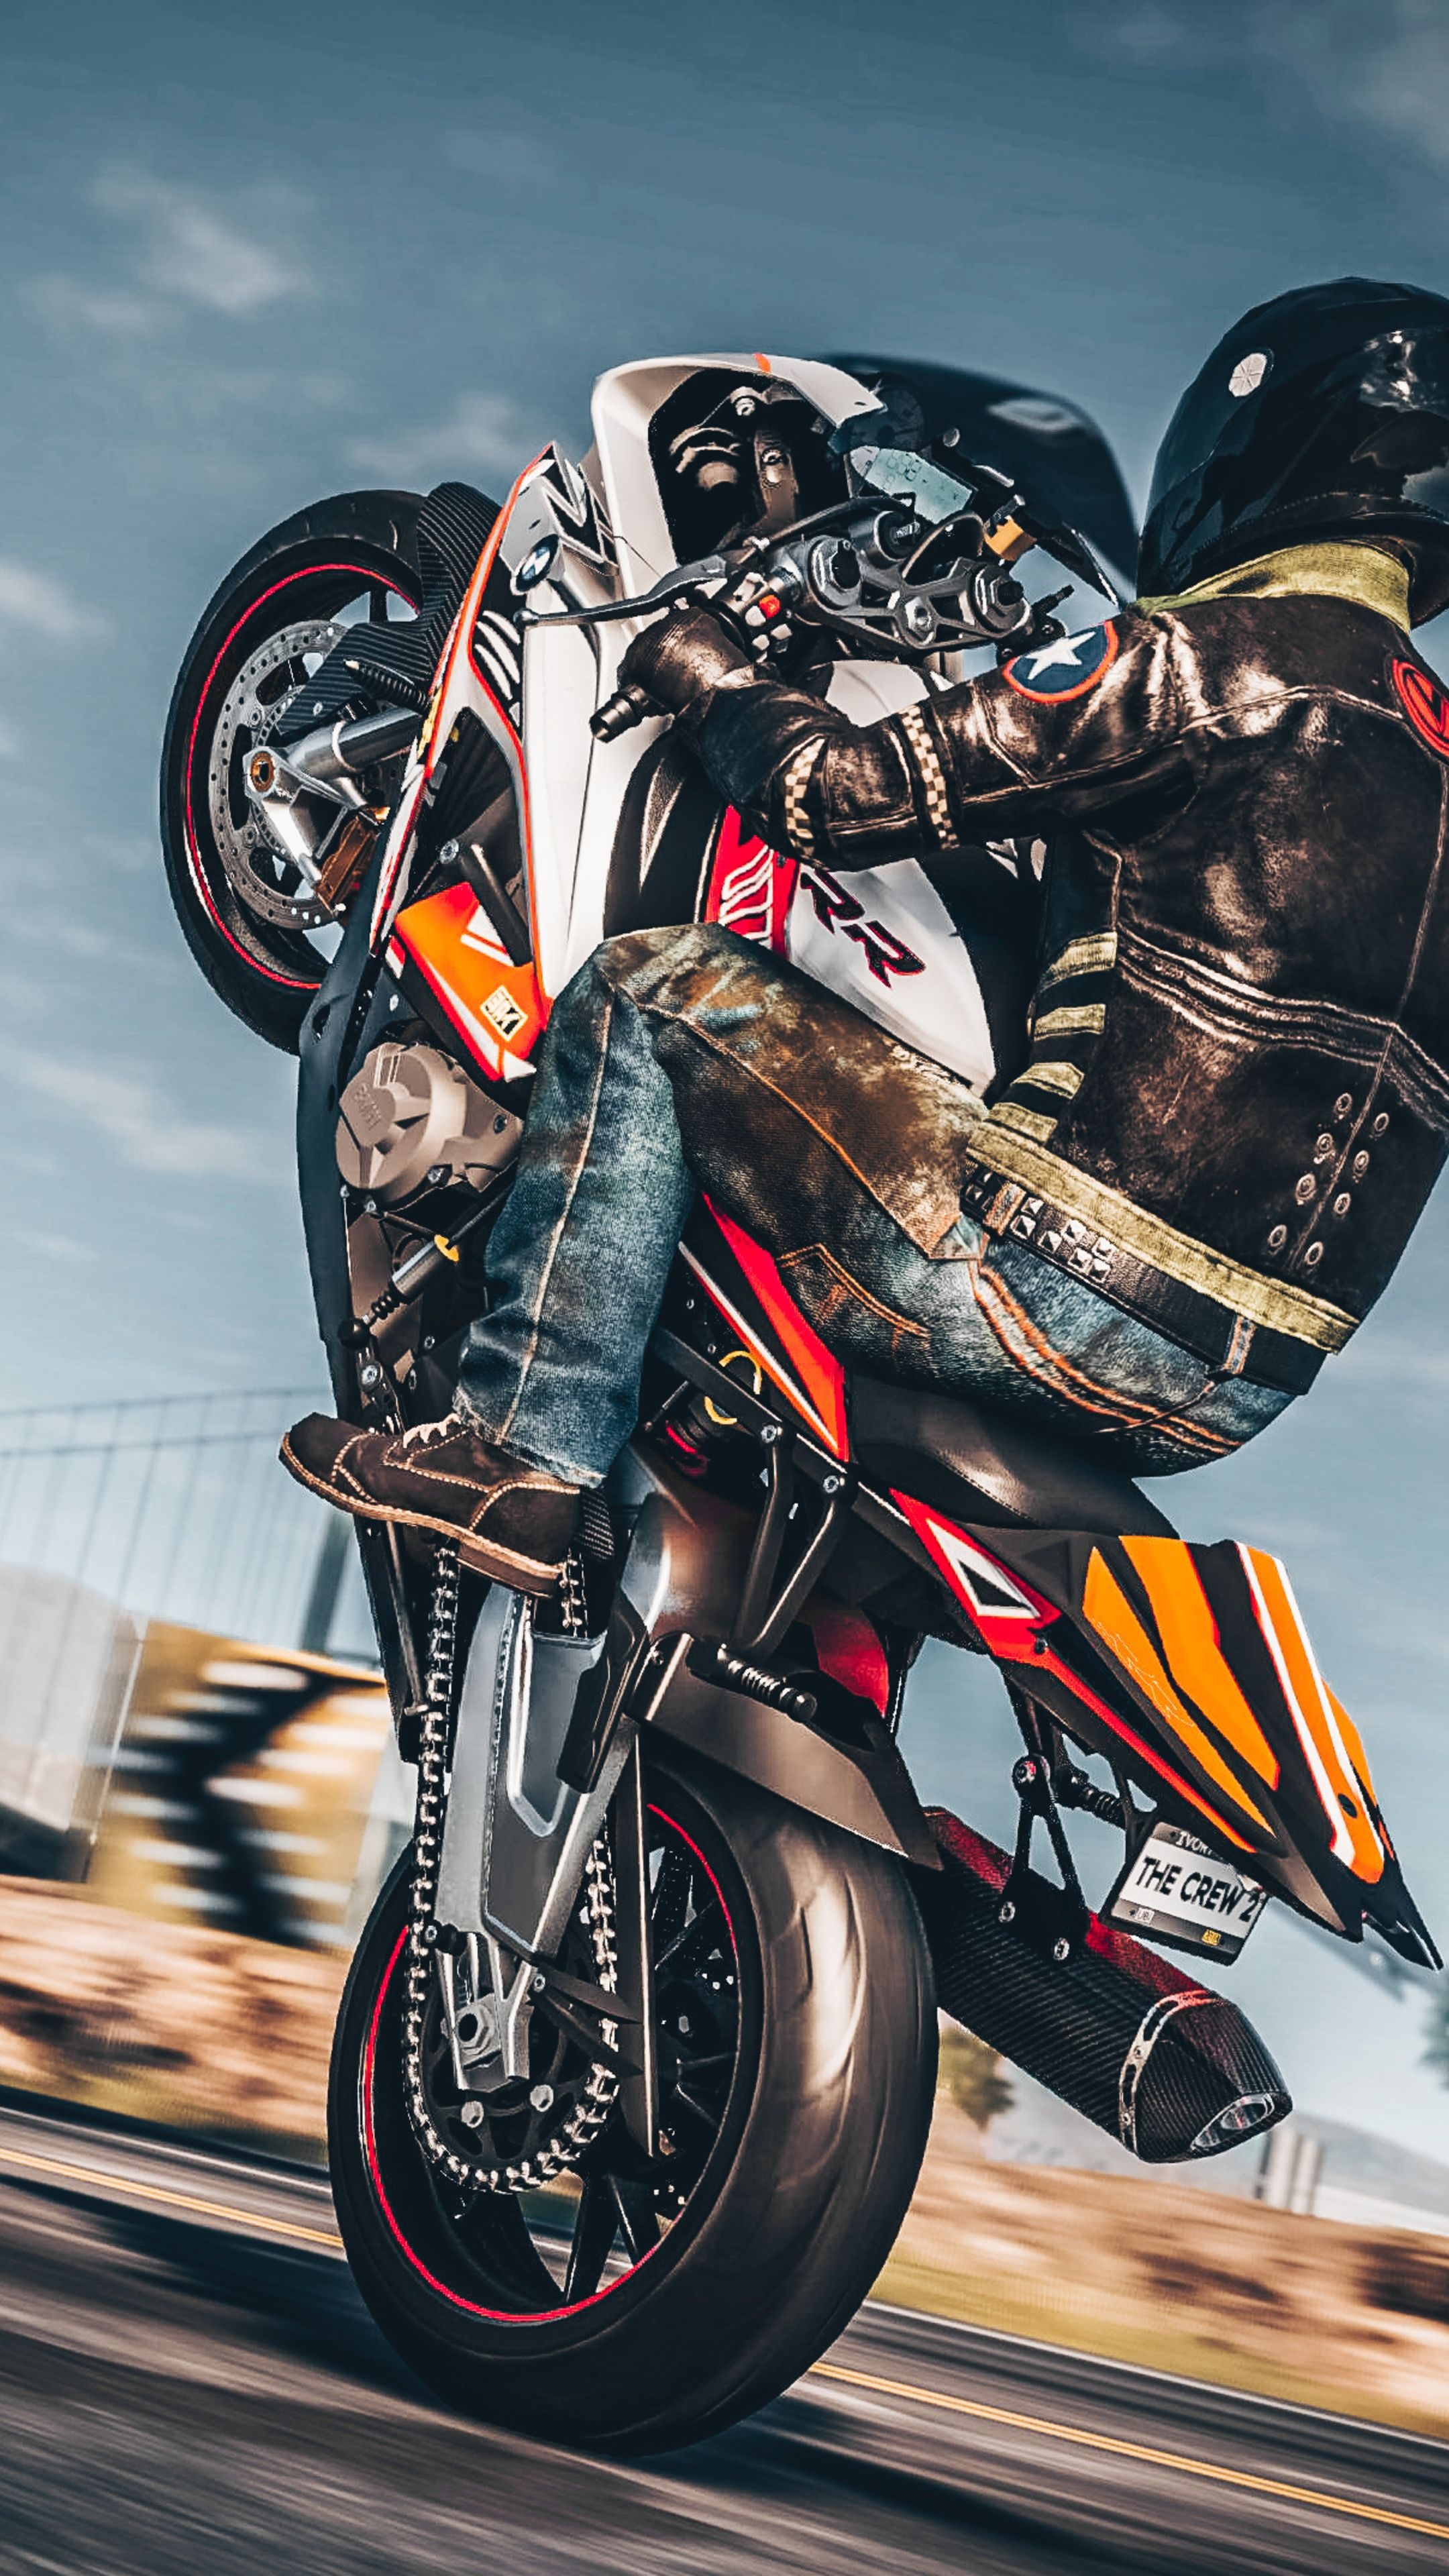 Supermoto: Motorcycle wheelie, Wheelstand, A common motorcycle stunt. 2160x3840 4K Background.